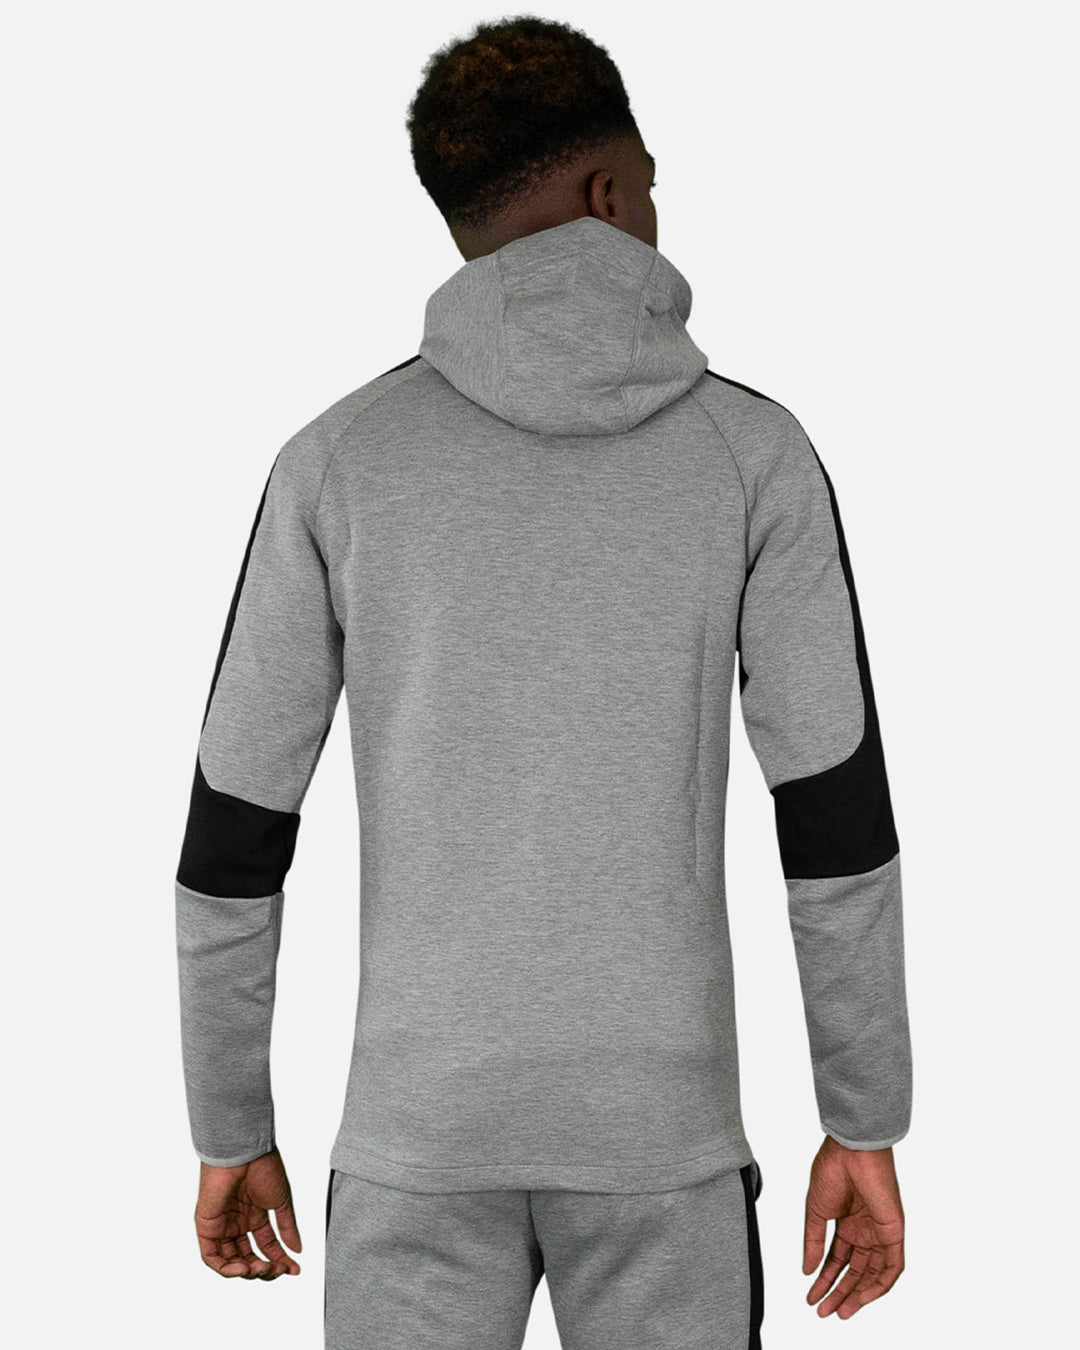 Puma Evostripe Hooded Jacket - Grey/Black